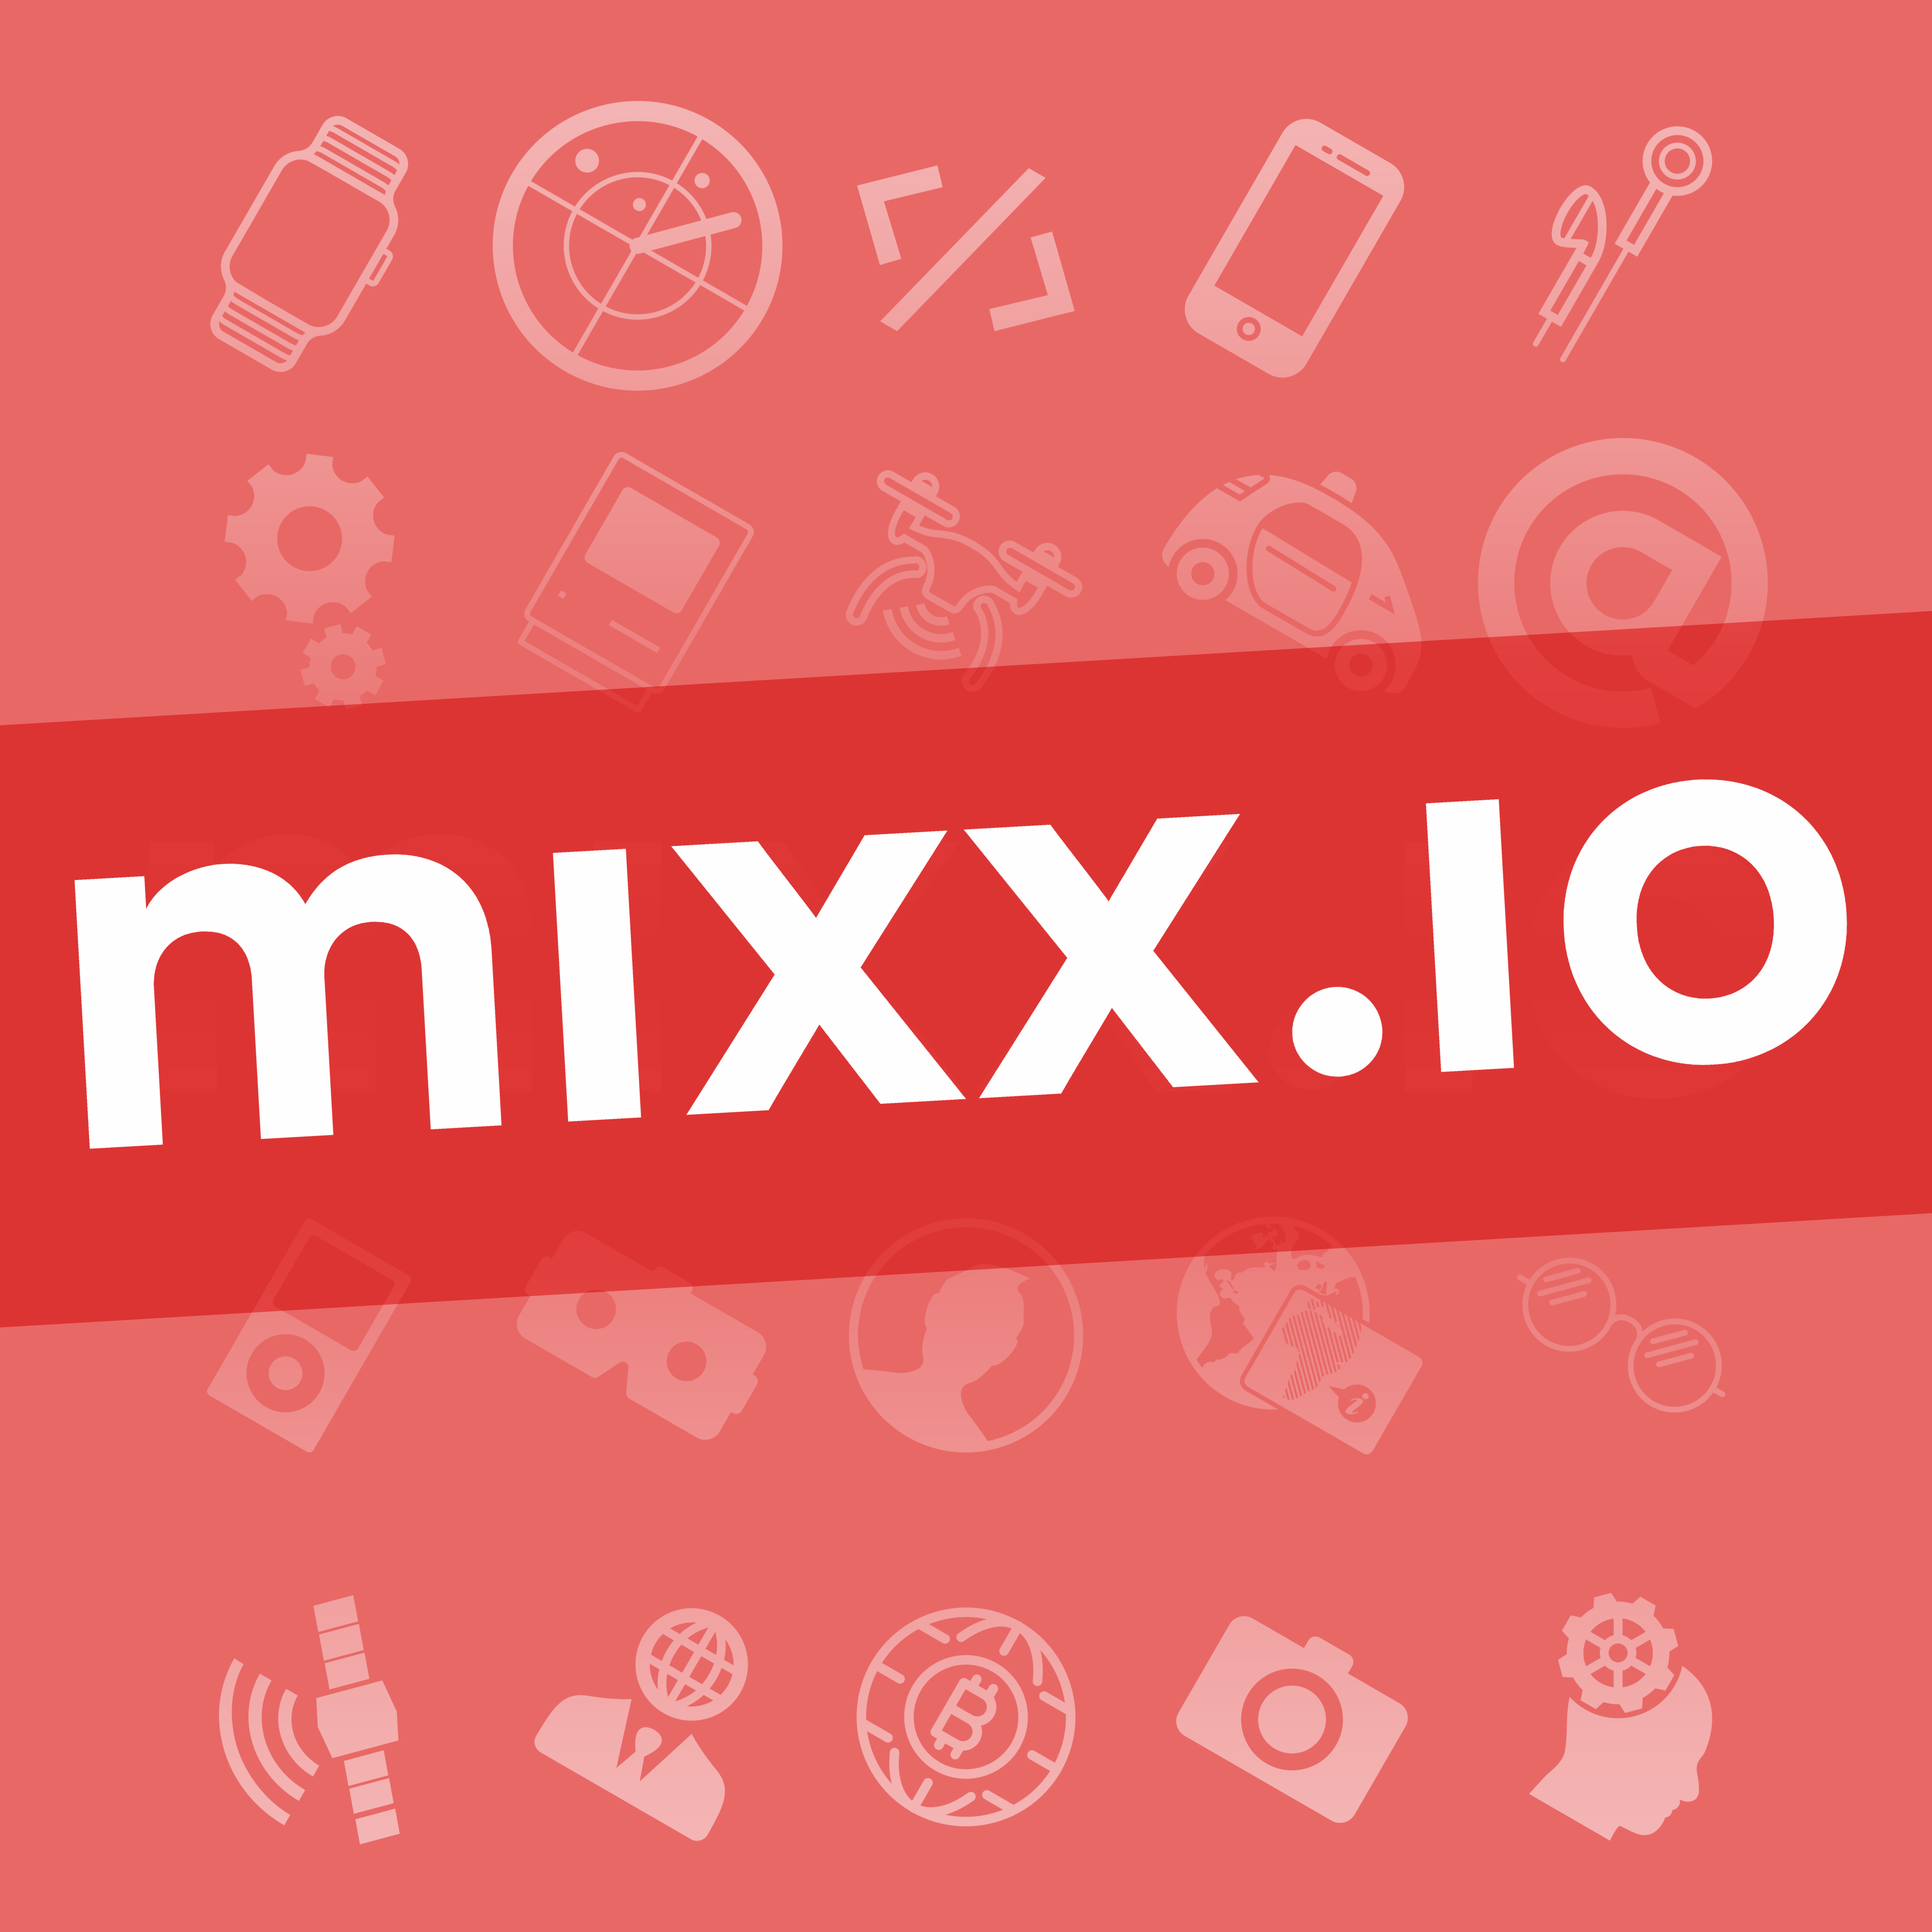 (c) Mixx.io